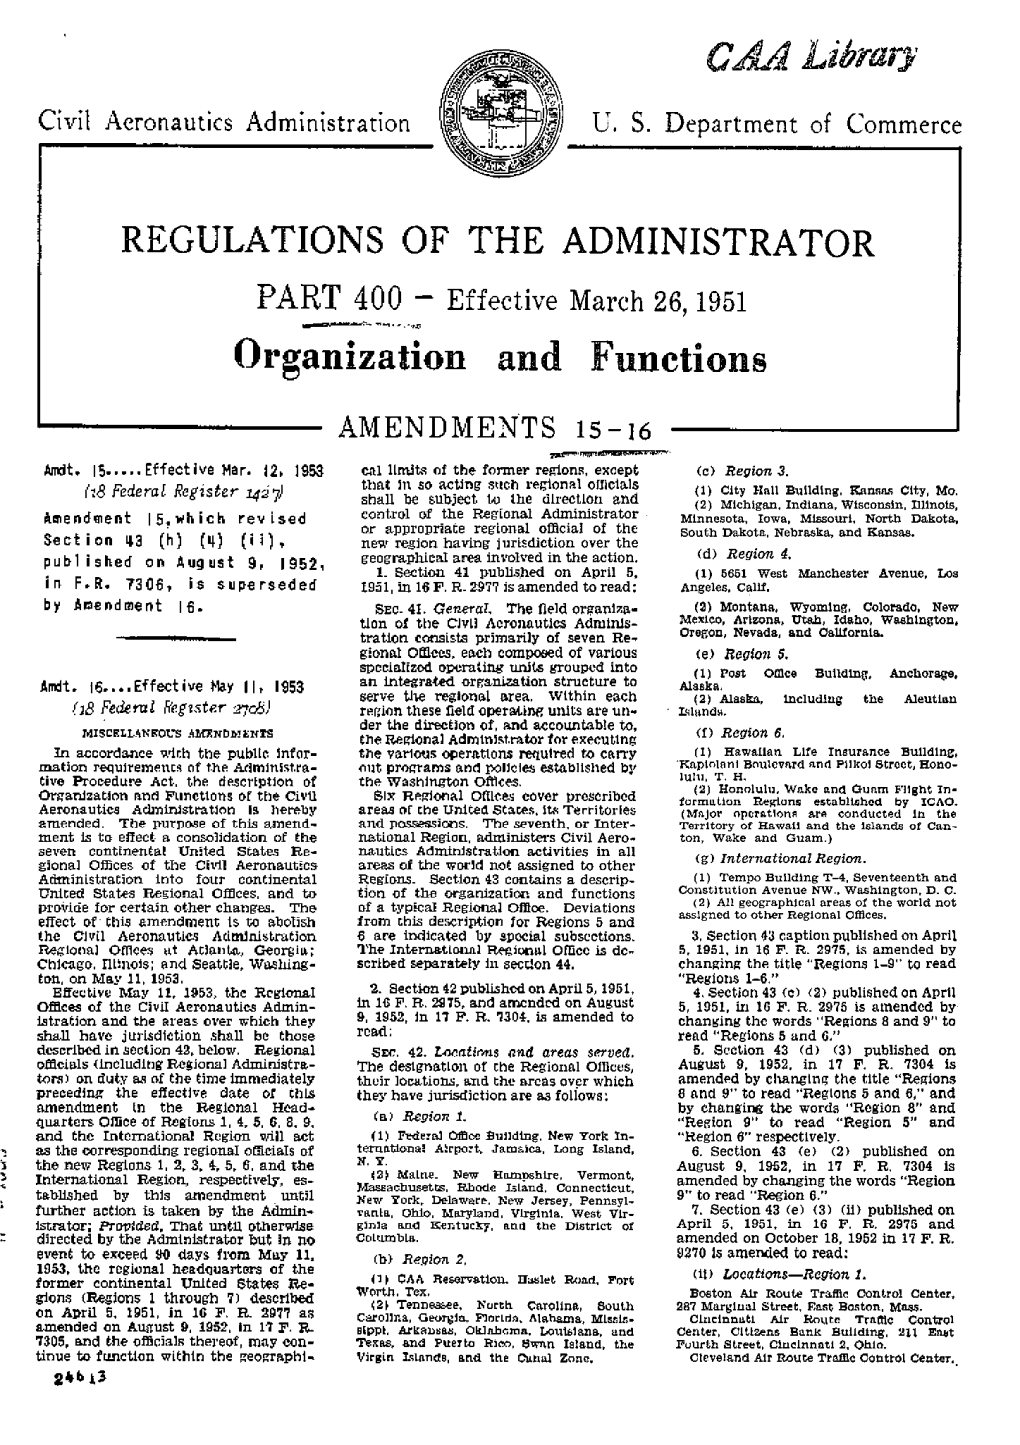 REGULATIONS of the ADMINISTRATOR Organization